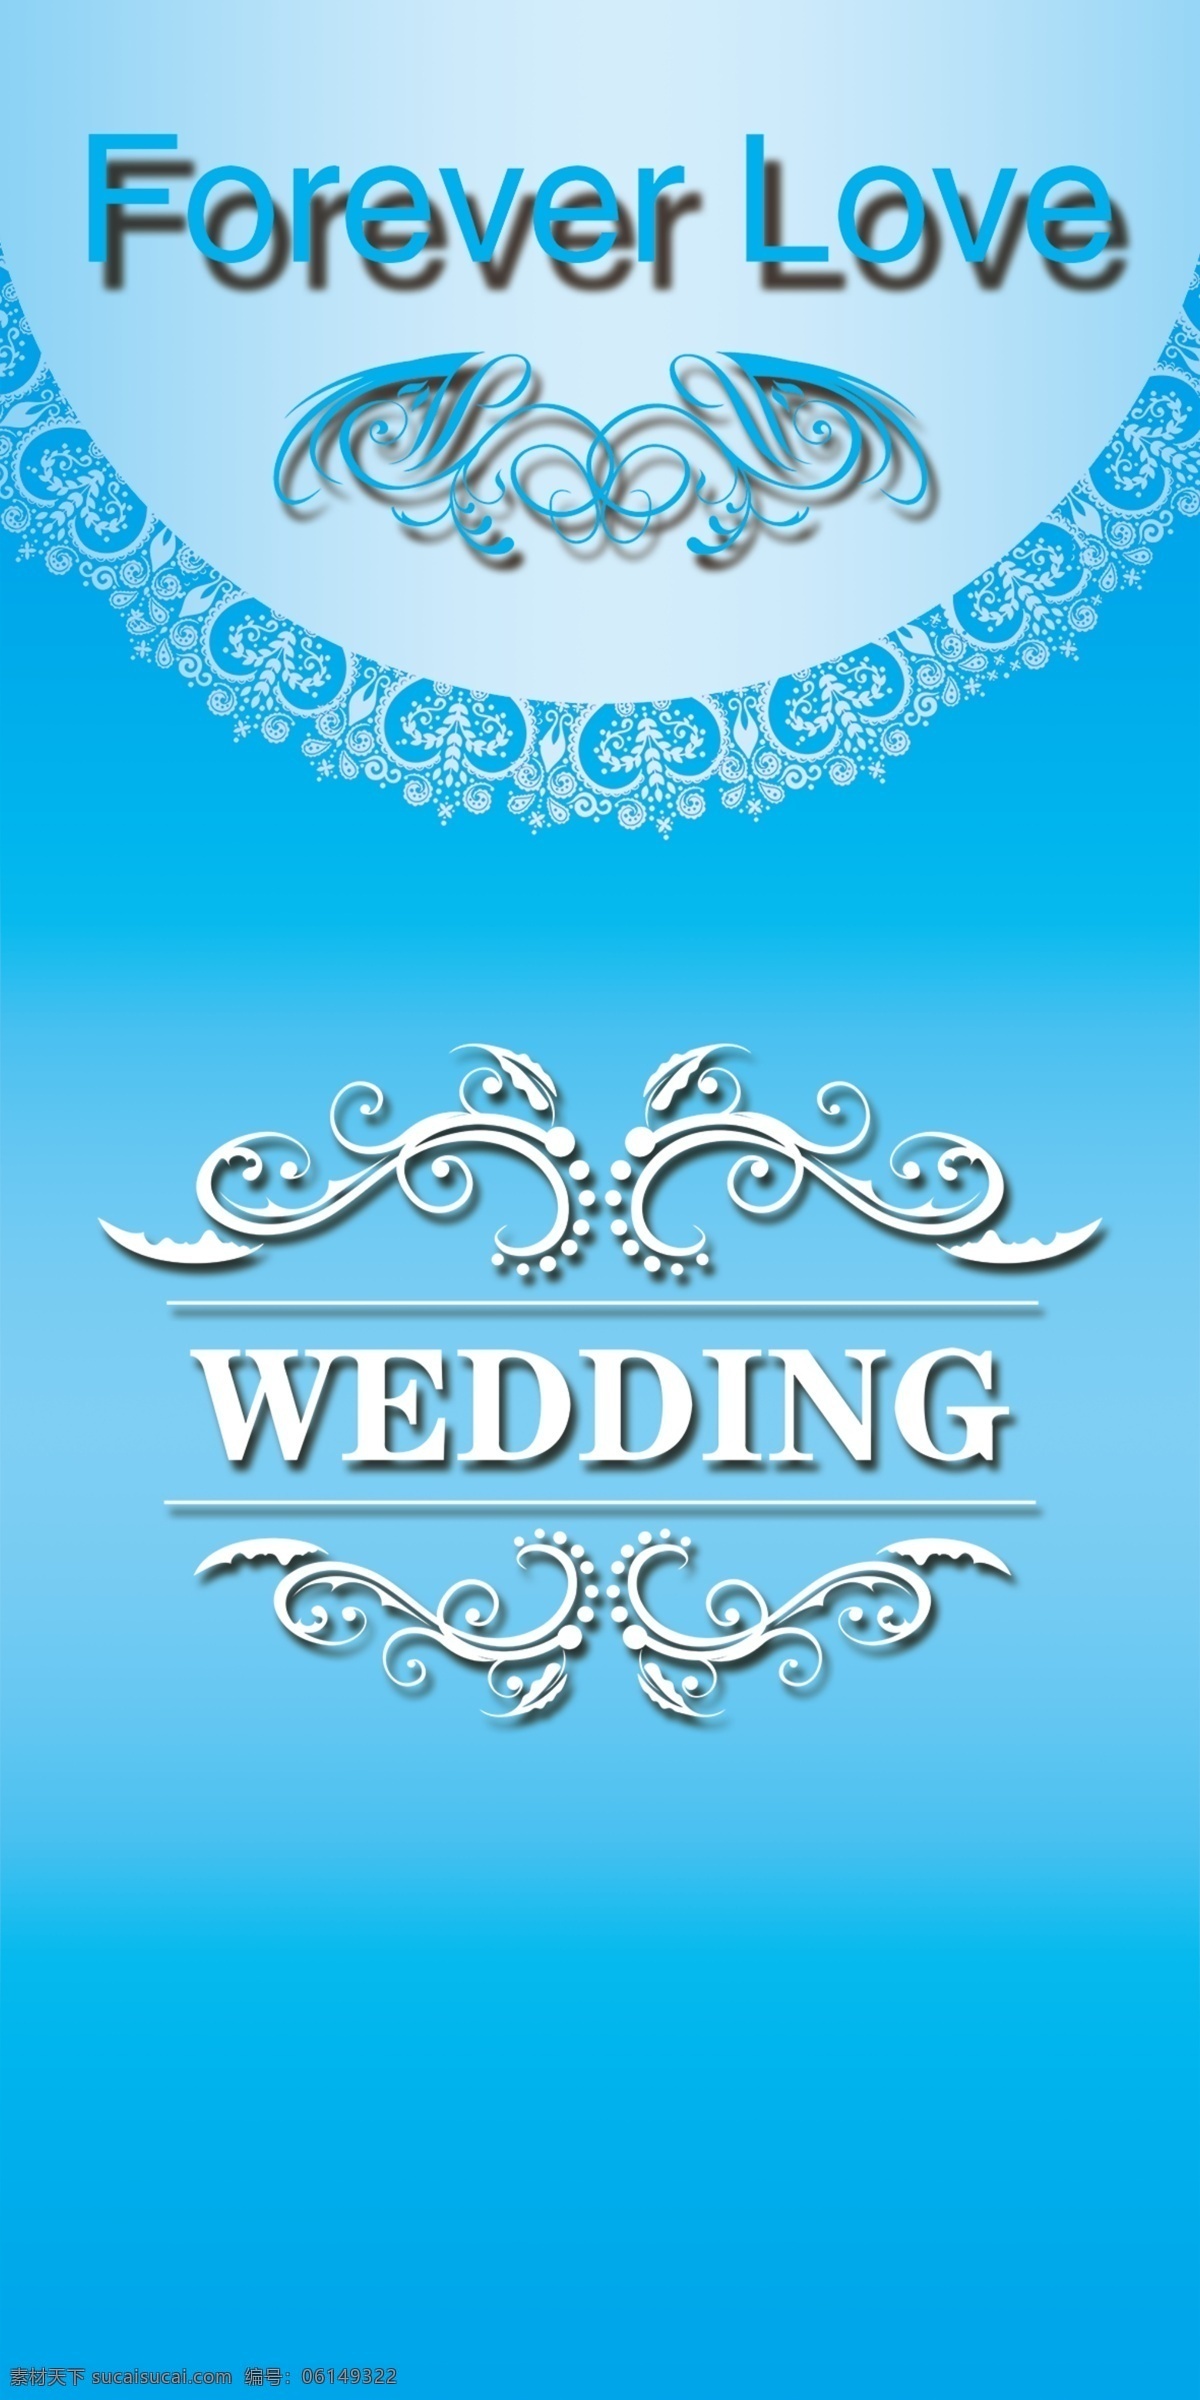 婚礼侧屏设计 婚礼 侧屏 花纹 大屏设计 青色 天蓝色